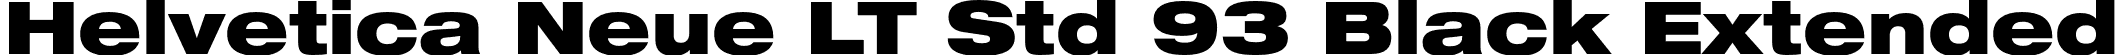 Helvetica Neue LT Std 93 Black Extended font - HelveticaNeueLTStd-BlkEx.otf